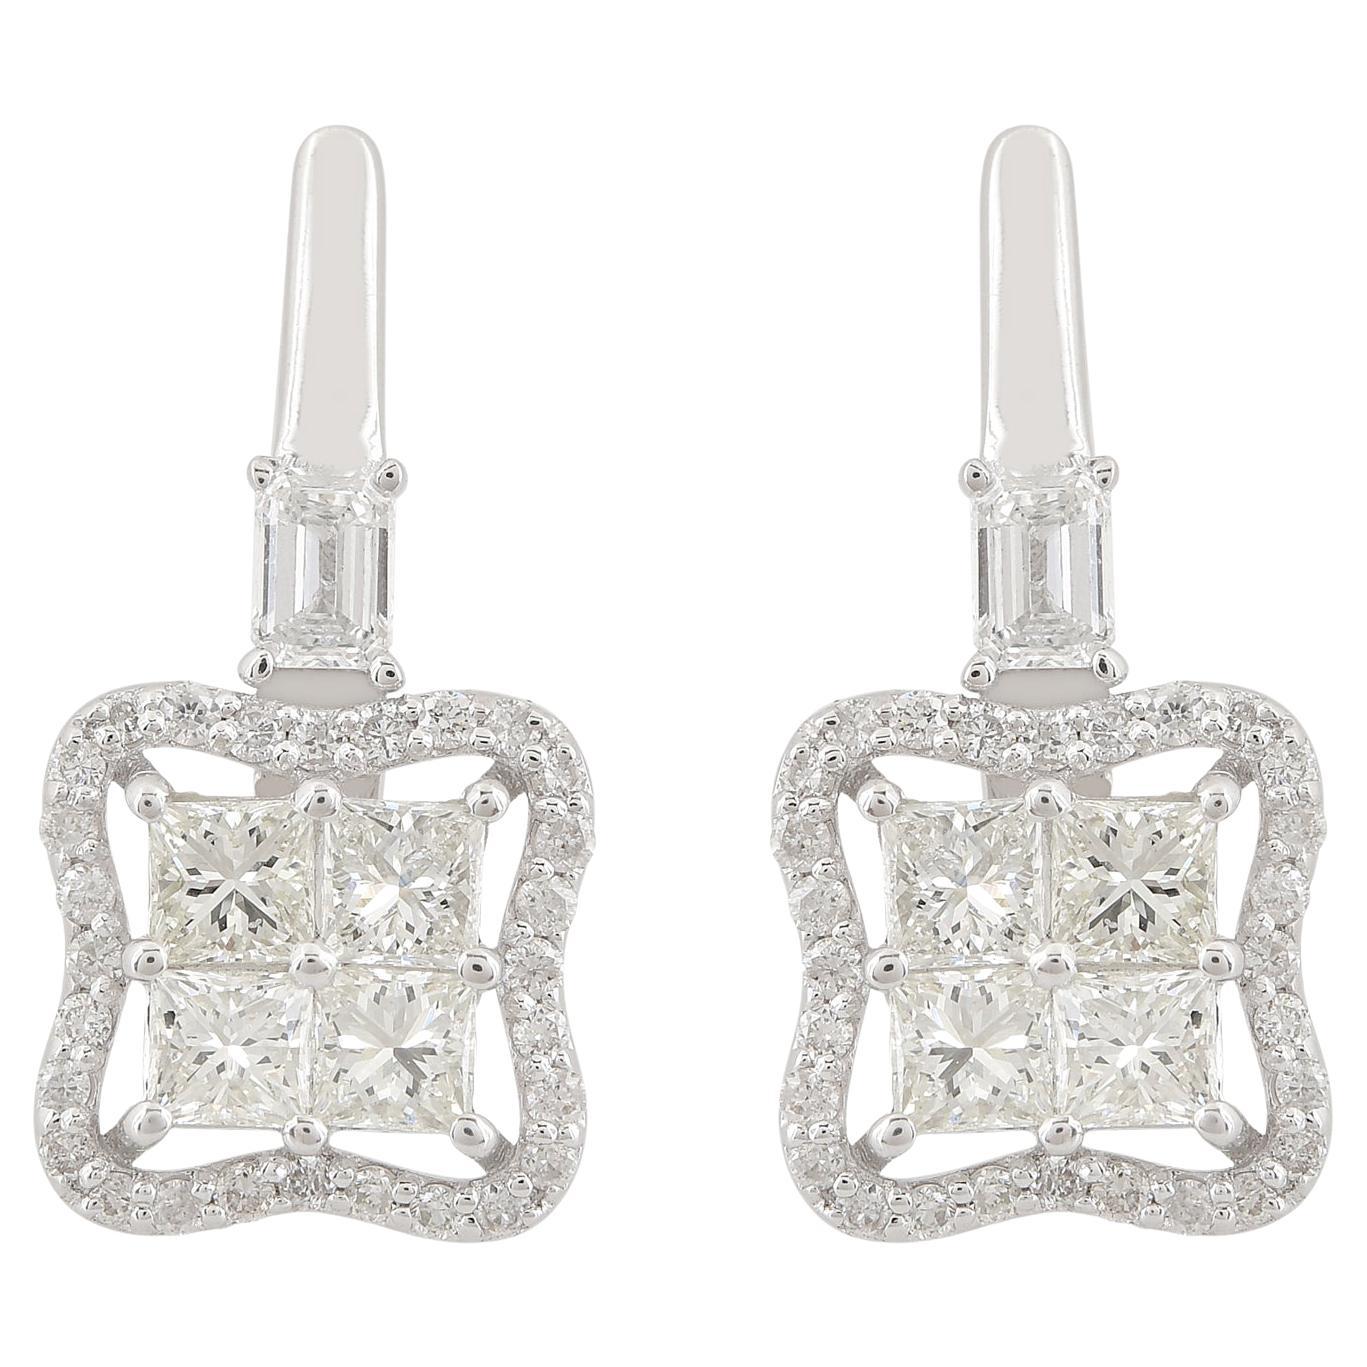 Real 1.32 Carat Diamond Clover Stud Earrings 14k White Gold Handmade Jewelry